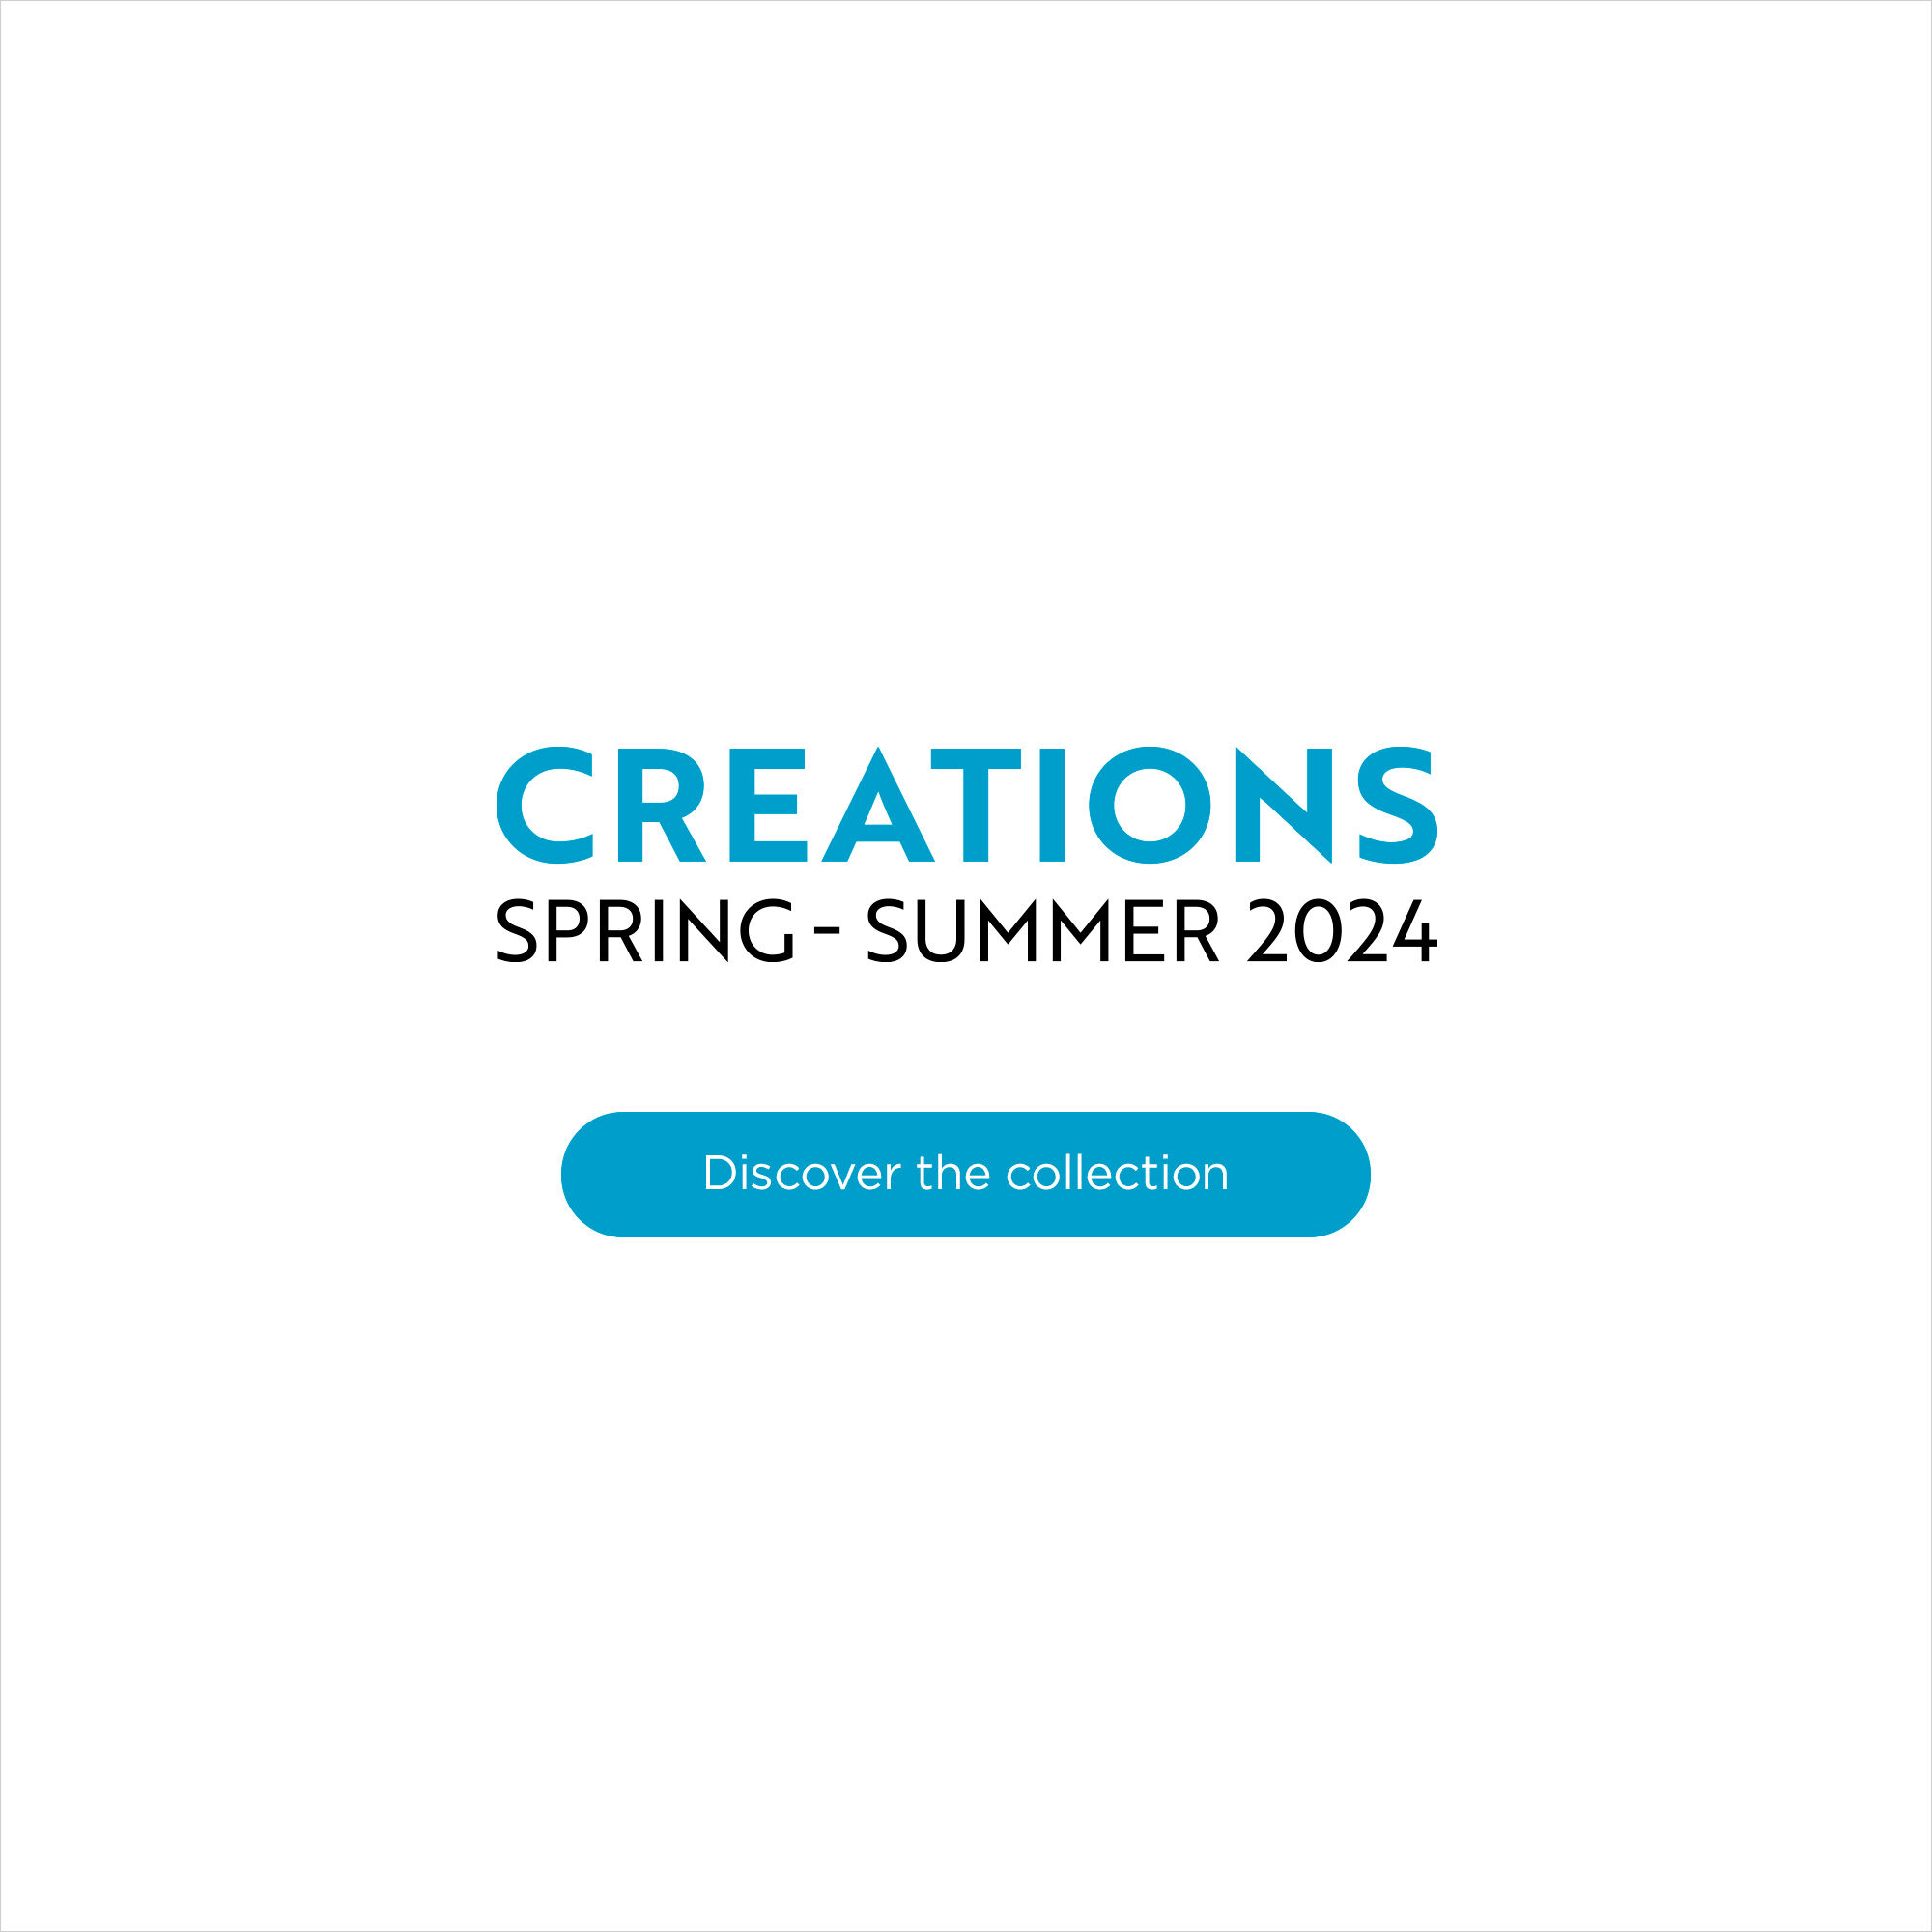 Spring-Summer 2024 Creations